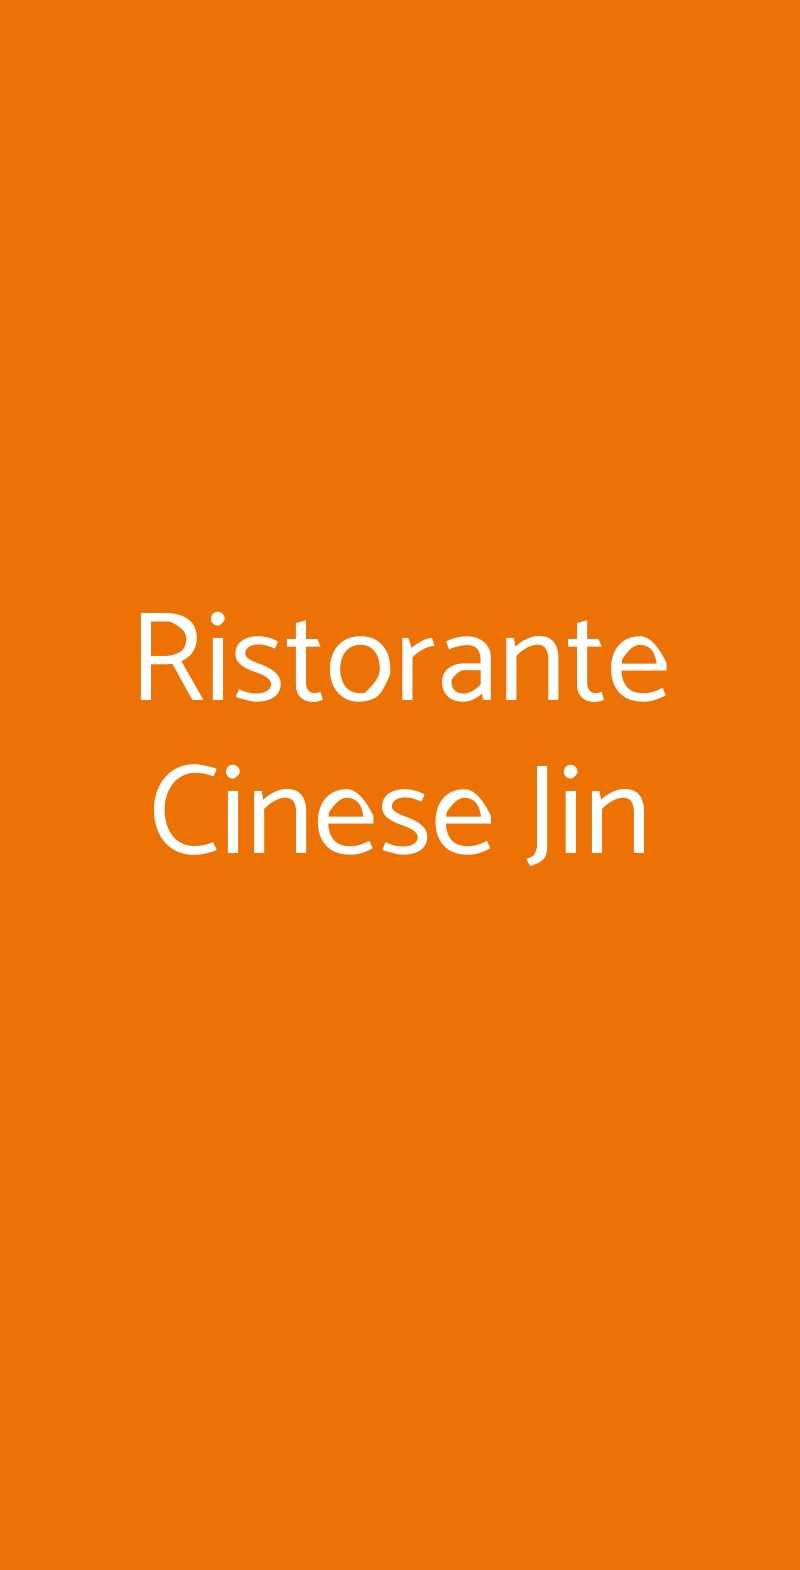 Ristorante Cinese Jin Roma menù 1 pagina